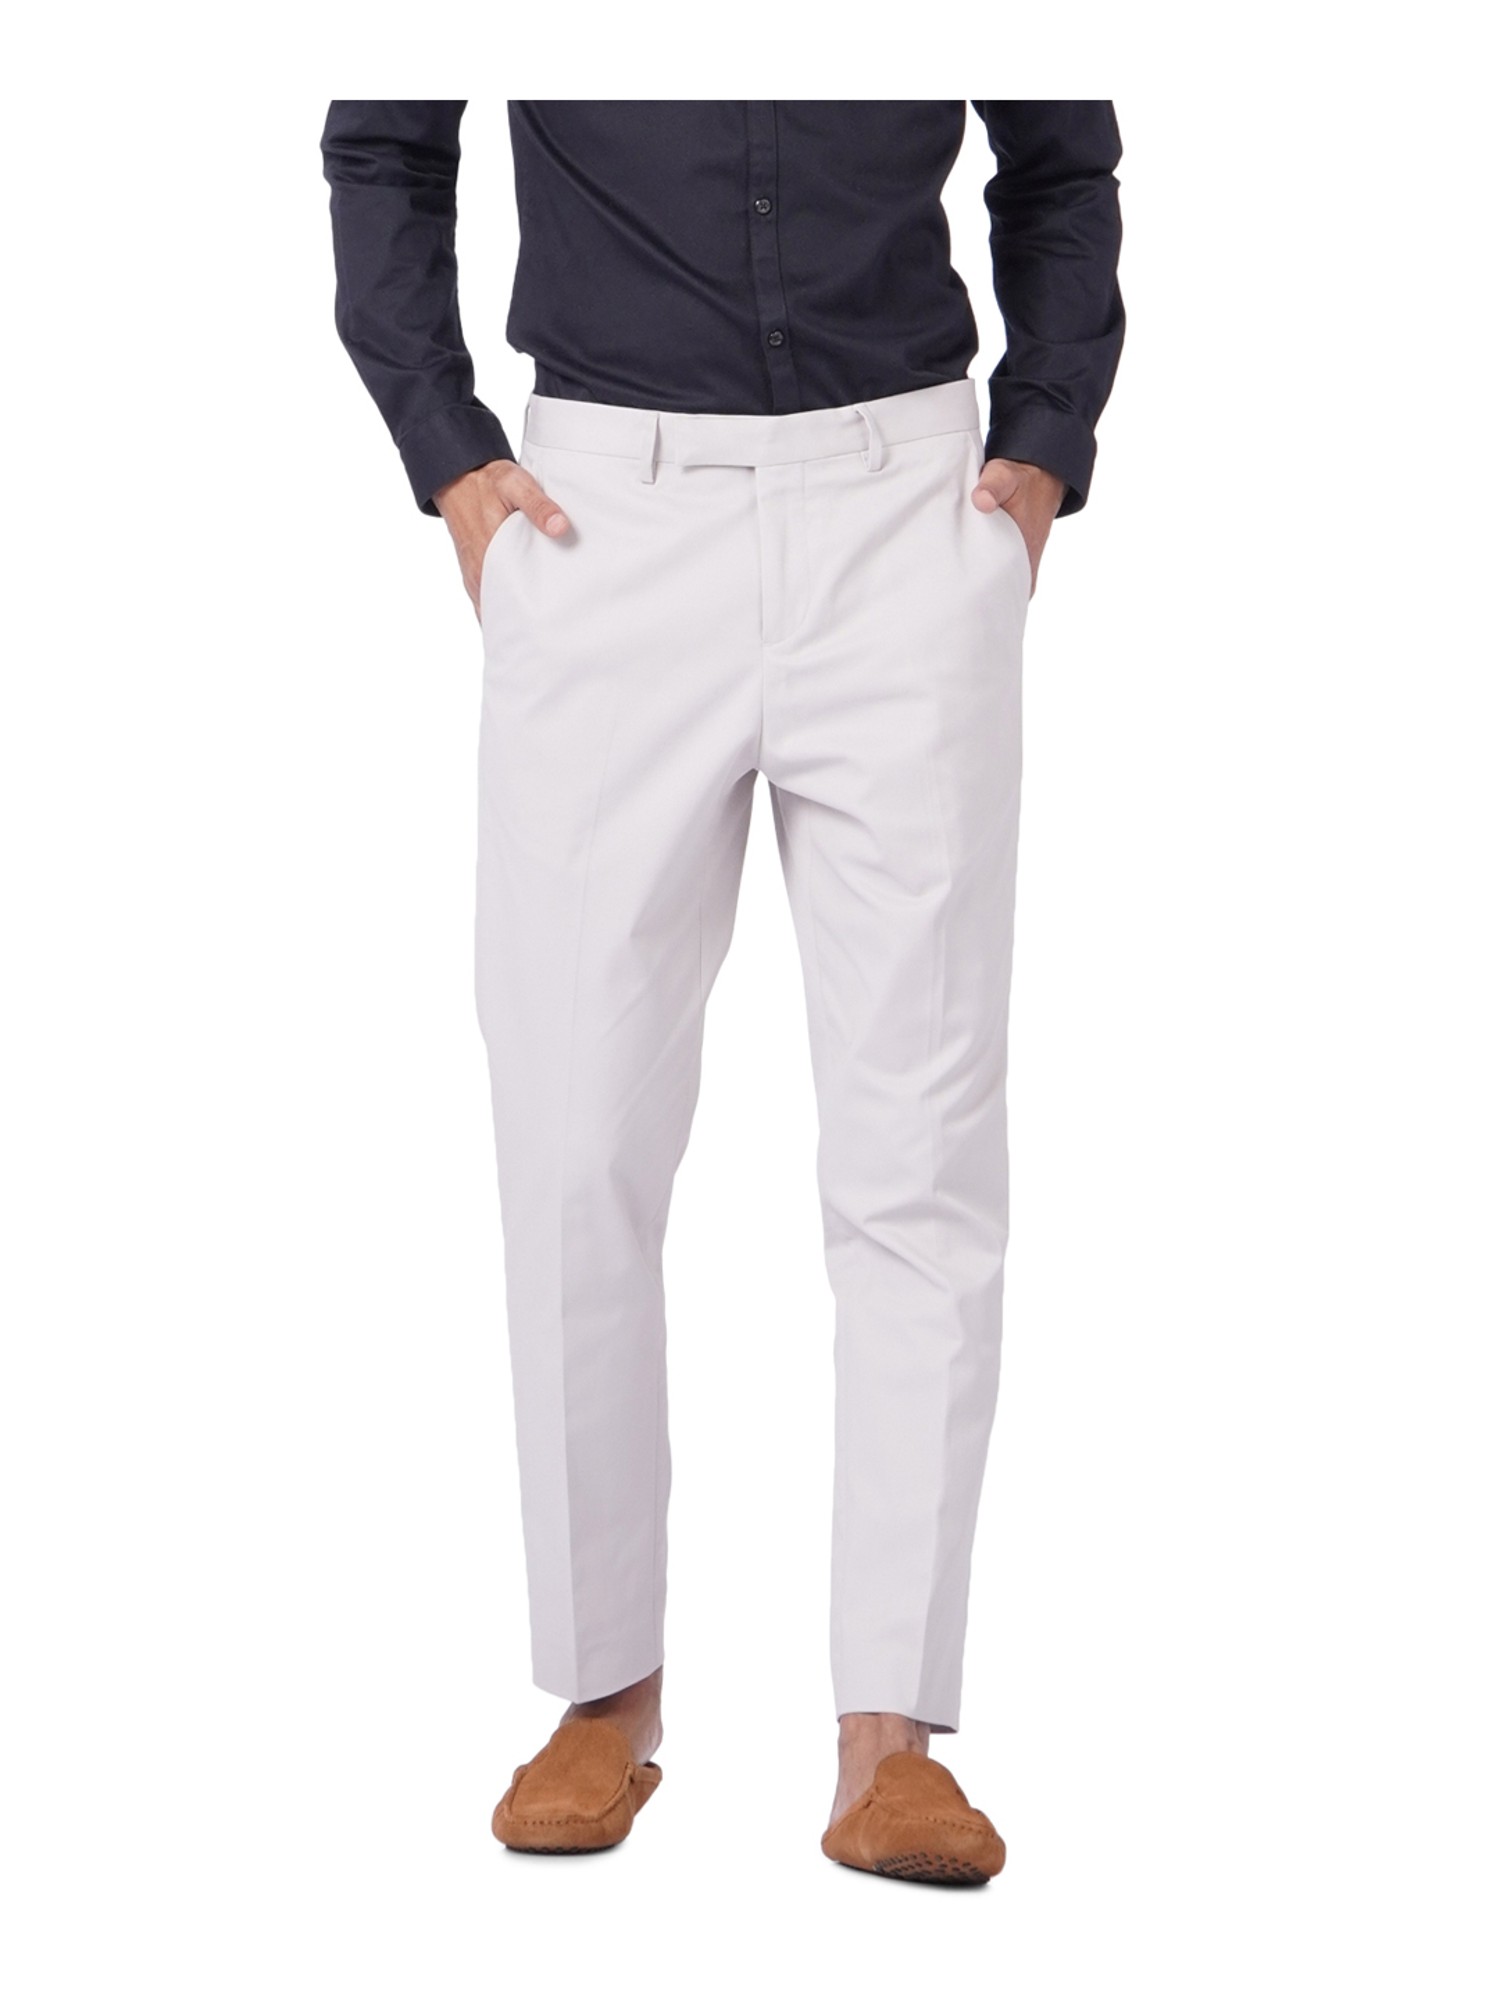 Buy Grey Trousers  Pants for Men by Jack  Jones Online  Ajiocom